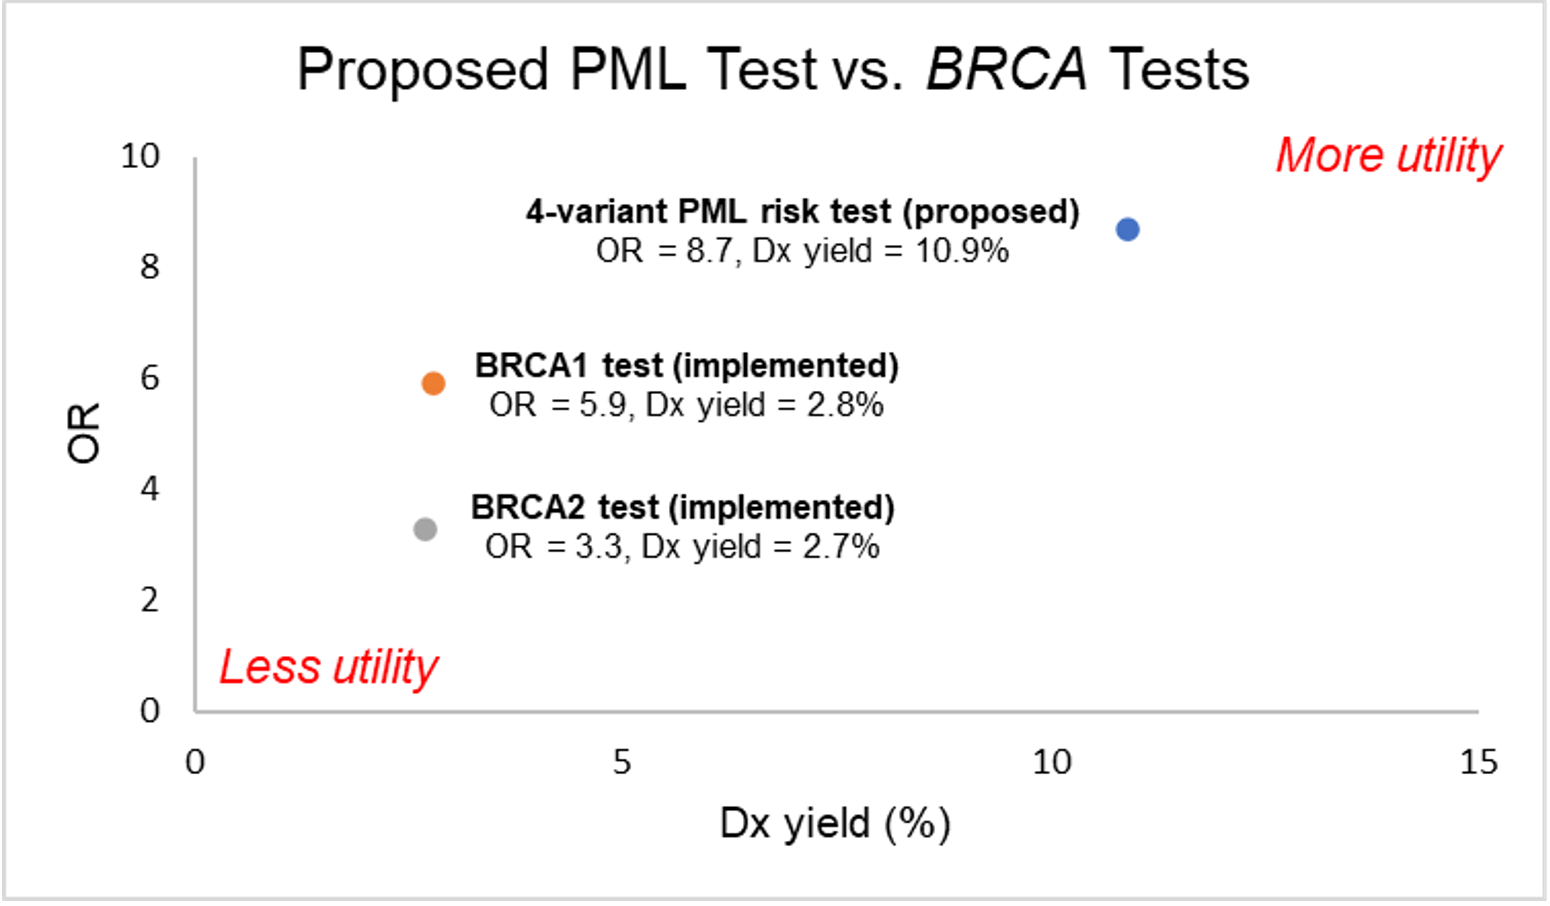 Figure 1. Proposed PML test vs. BRCA tests